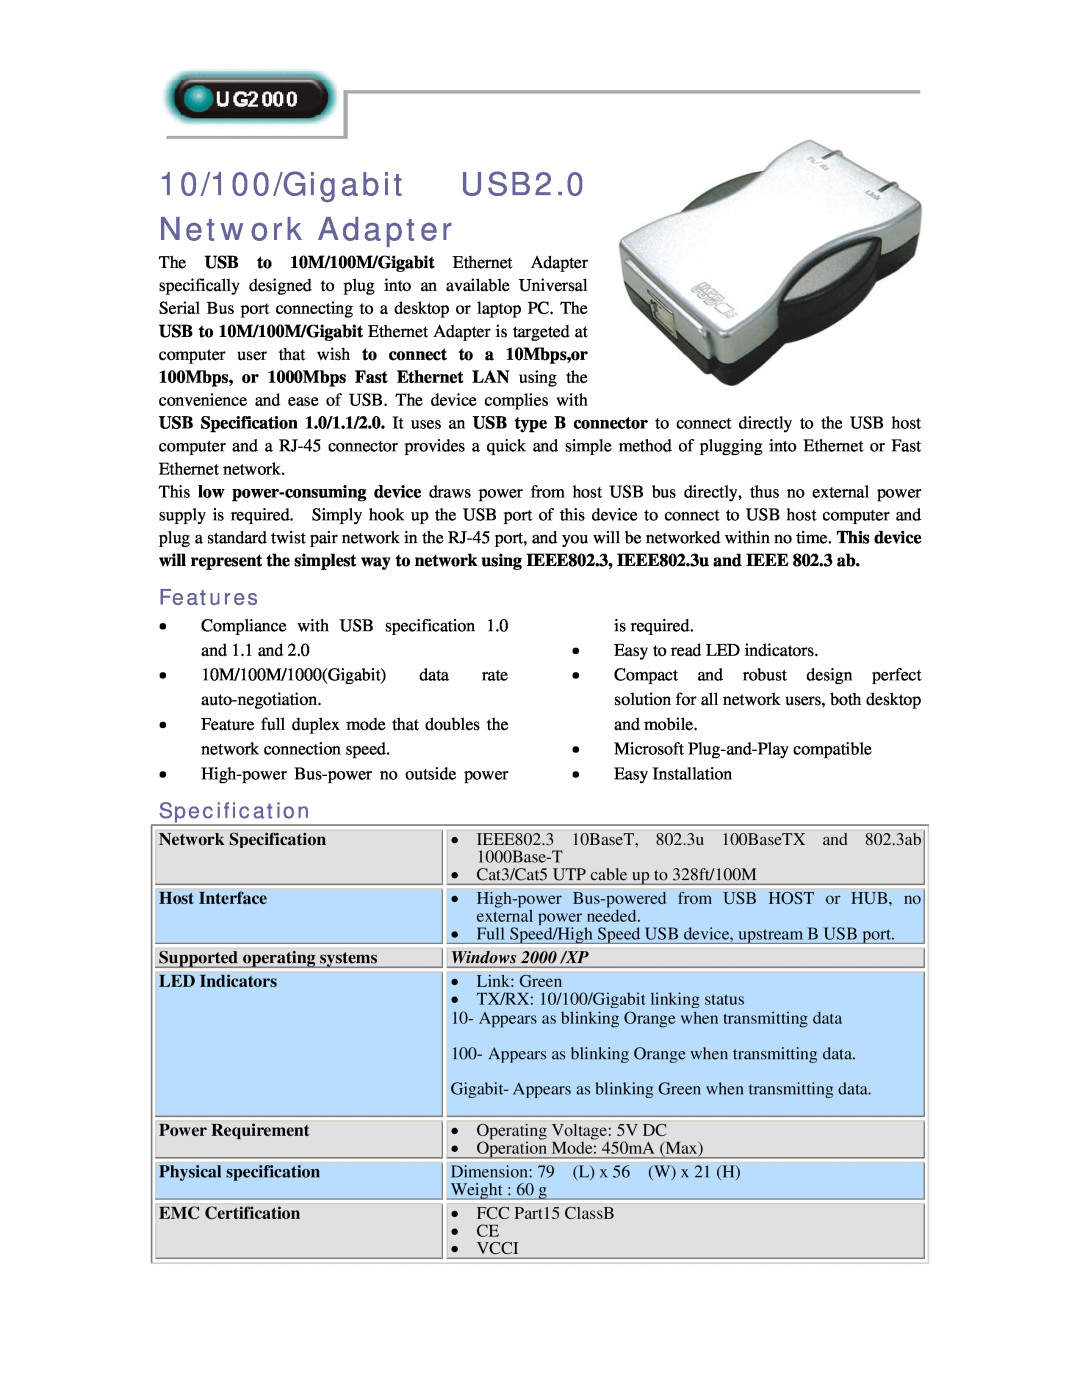 Abocom UG2000 manual 10/100/Gigabit USB2.0 Network Adapter, Features, Specification, Windows 2000 /XP 